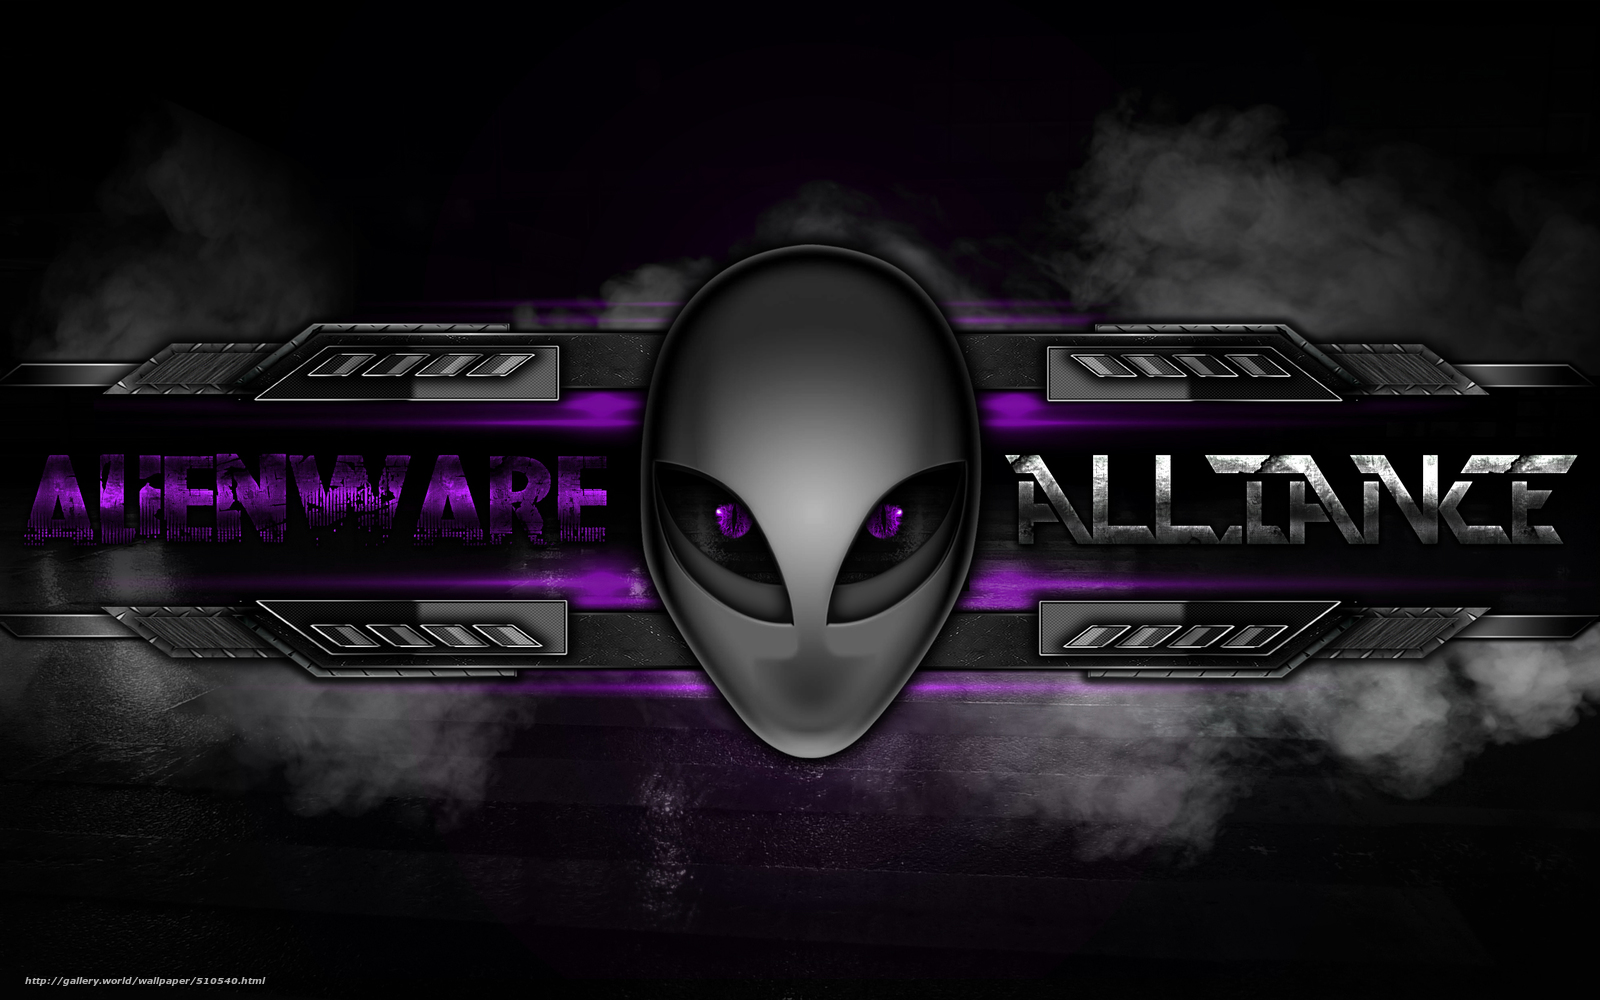 Wallpaper Alienware Alliance Background Gdefon Original